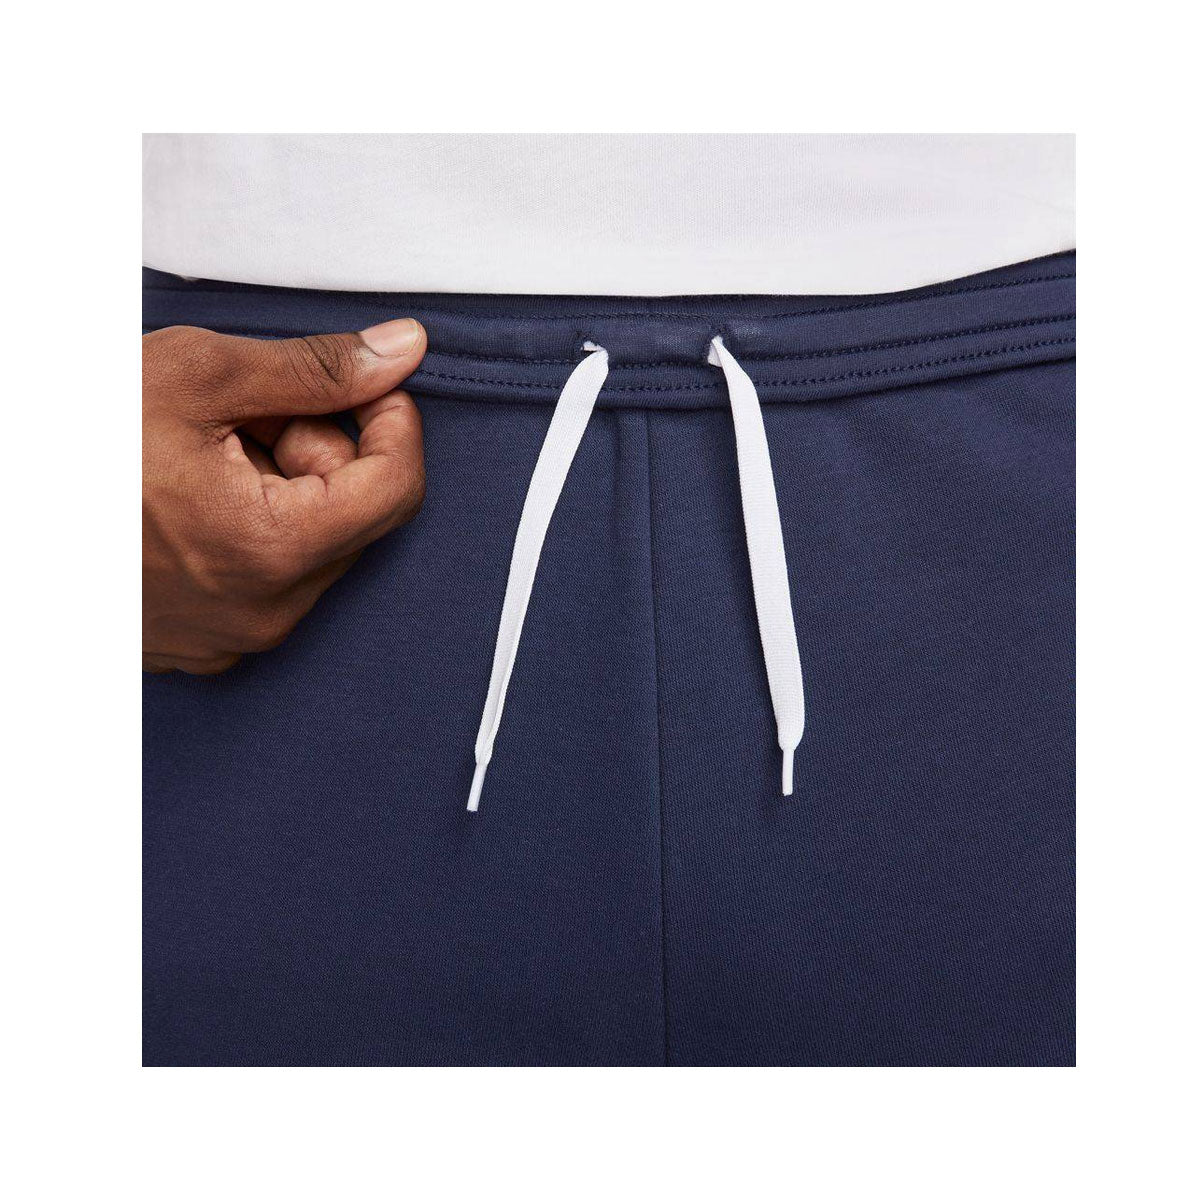 Nike Men's Park 20 Fleece Pants